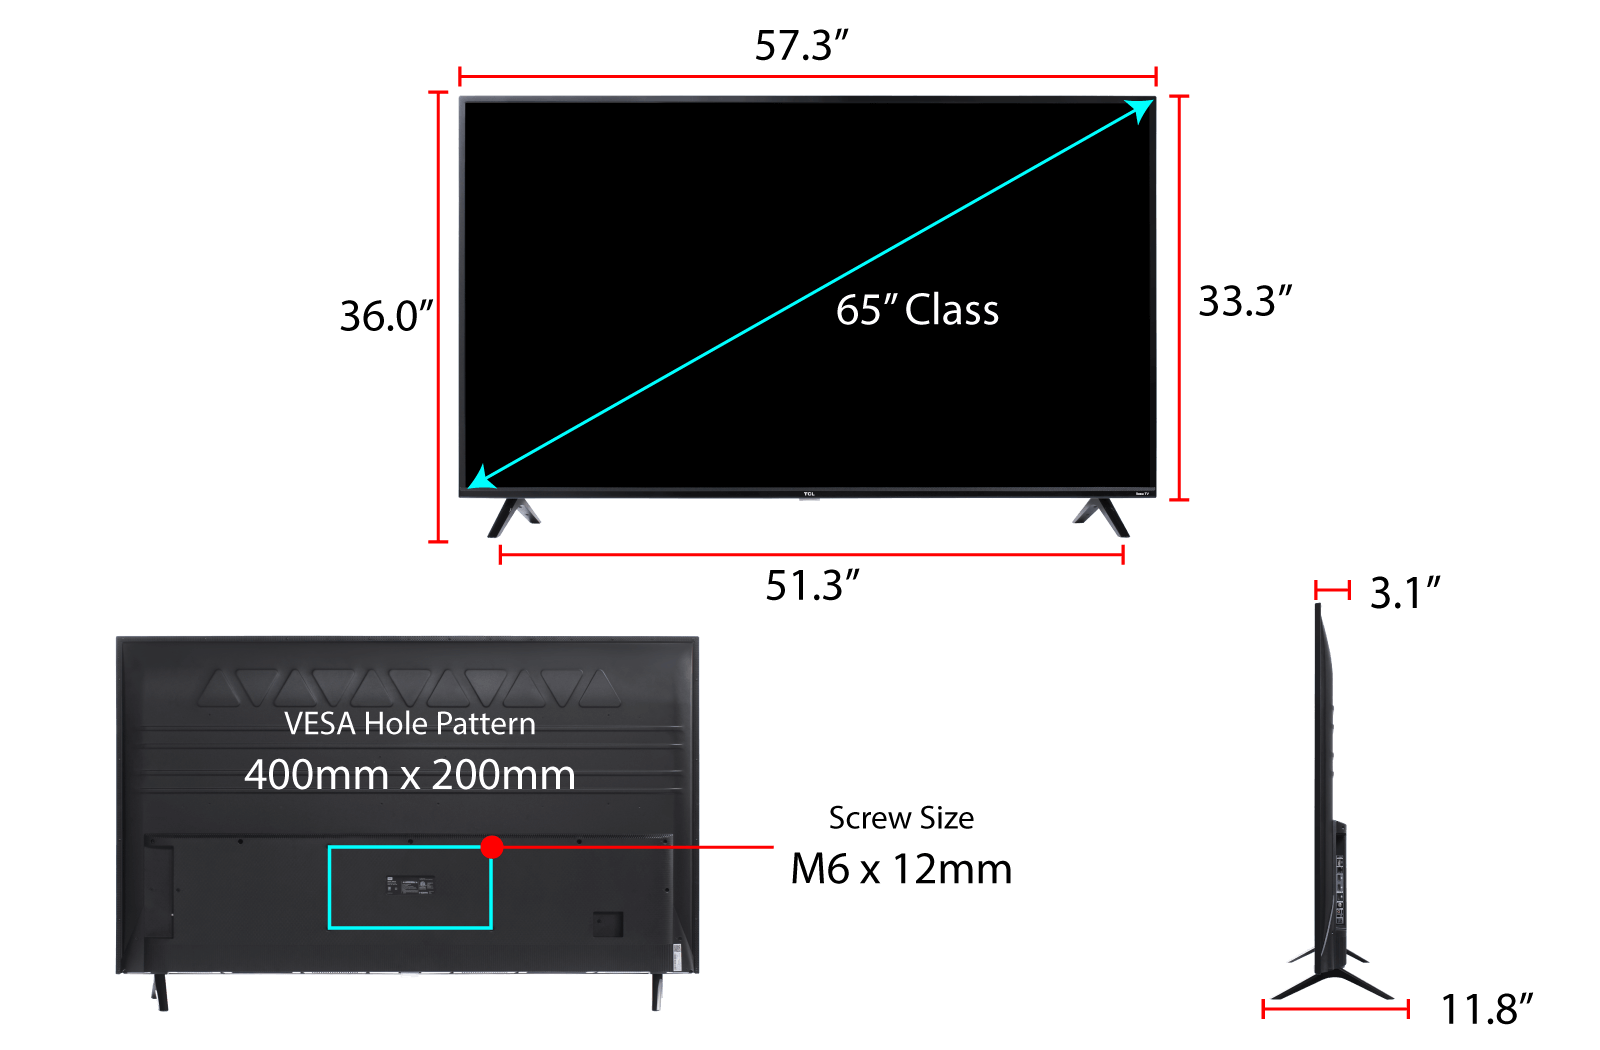 TCL 65” Class 4-Series 4K UHD HDR Roku Smart TV - 65S401